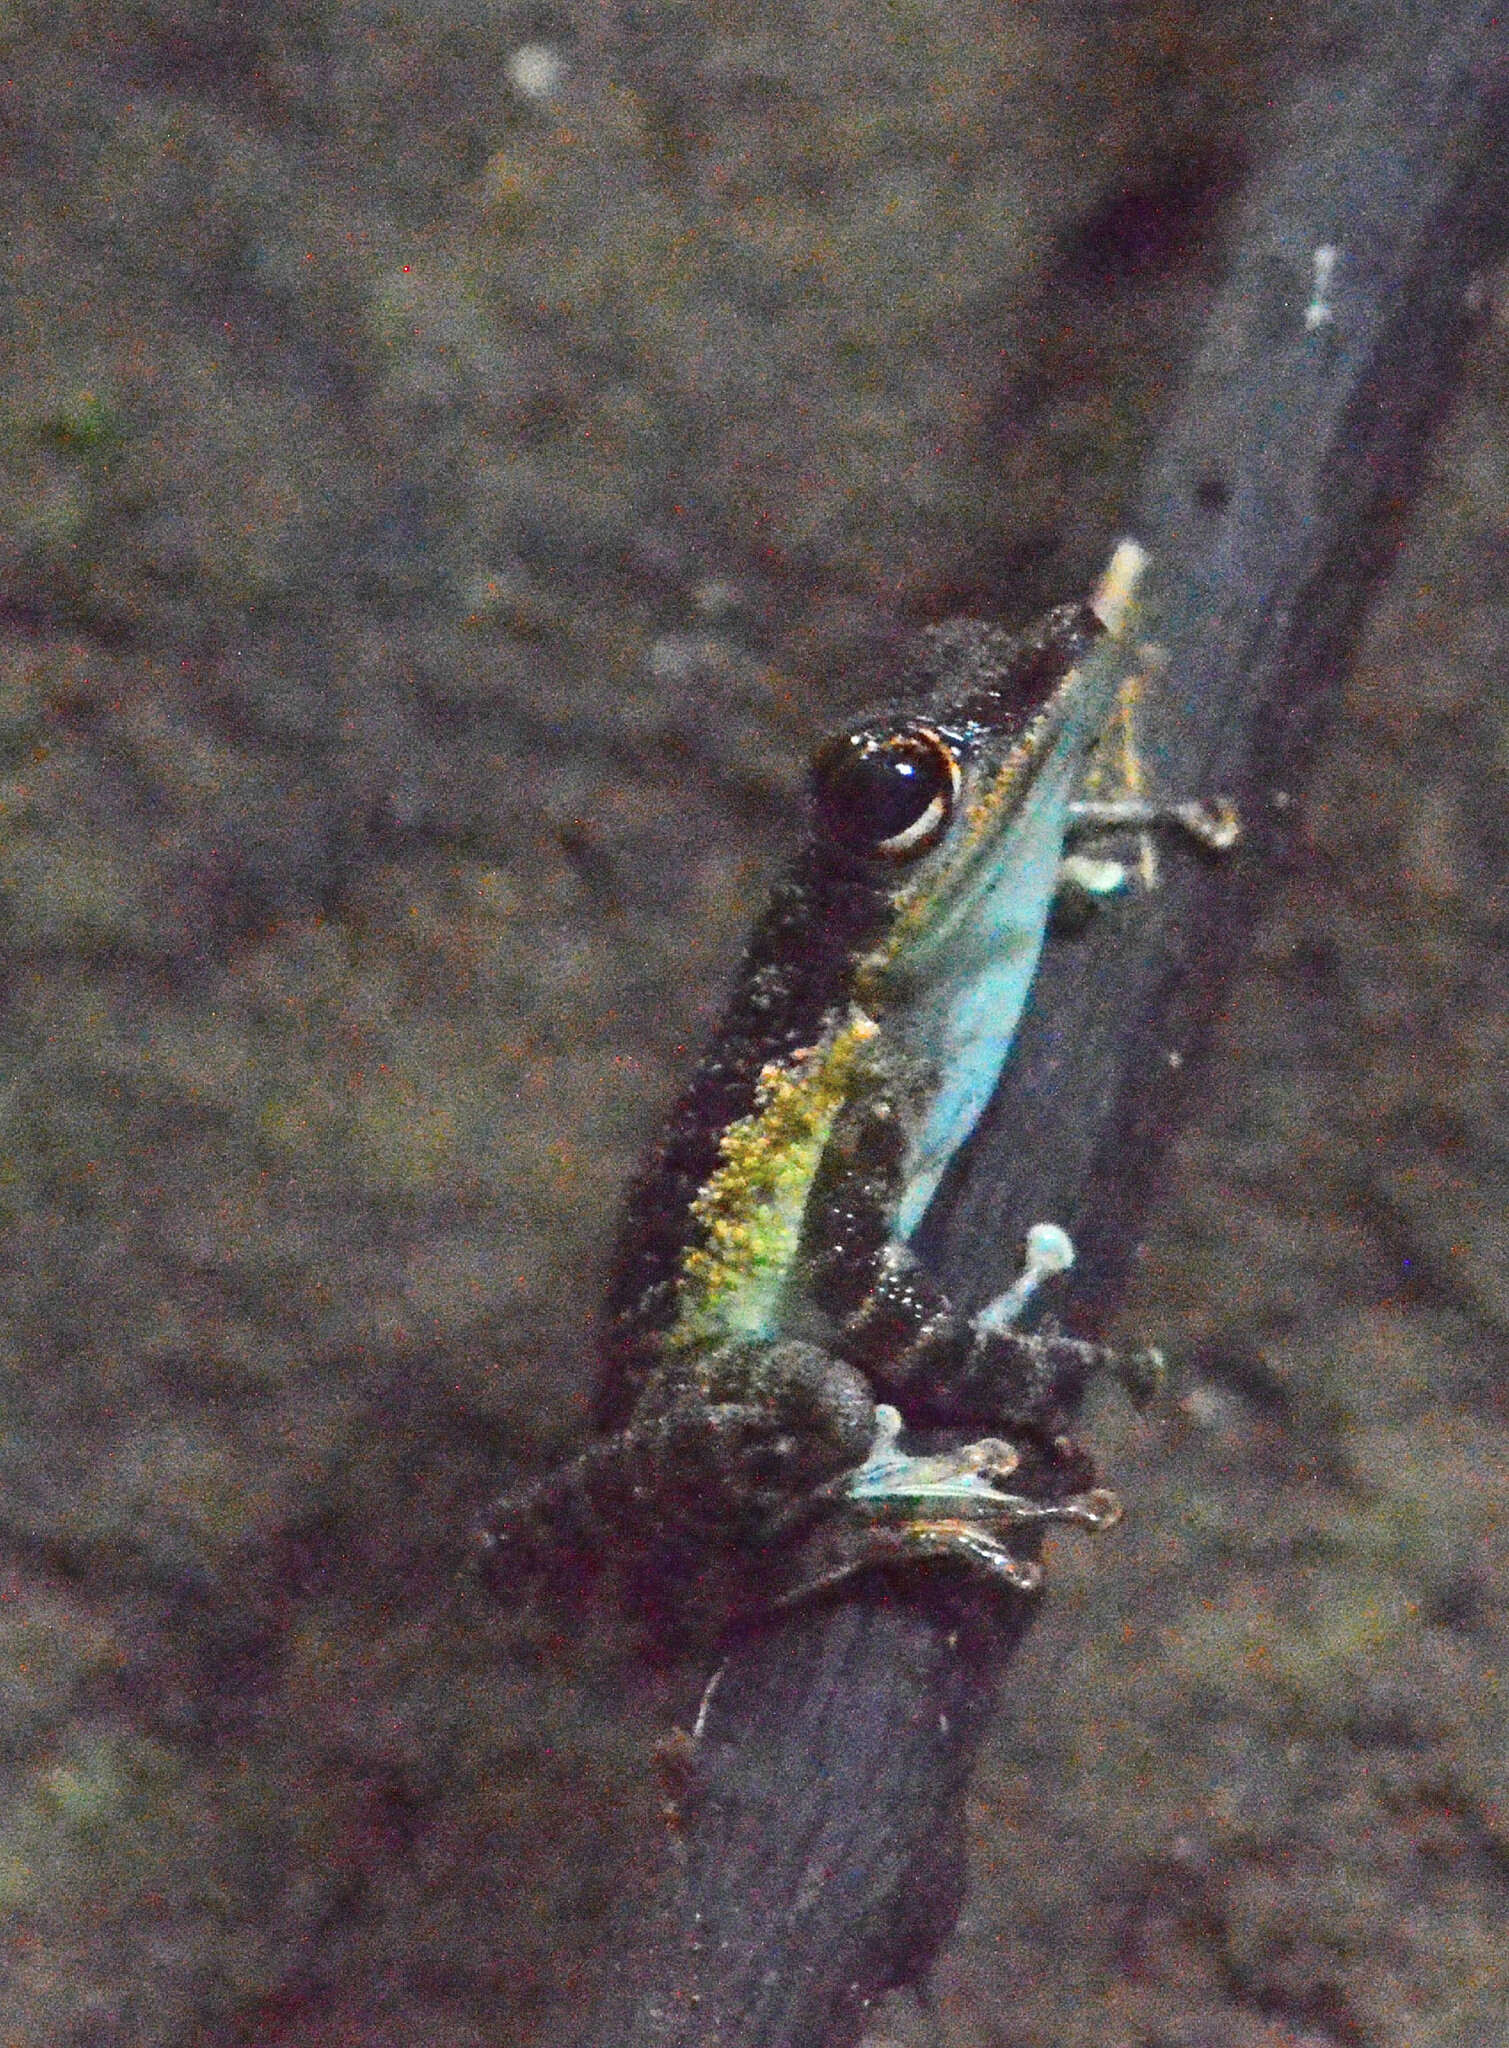 Image of Mindanao Splash Frog